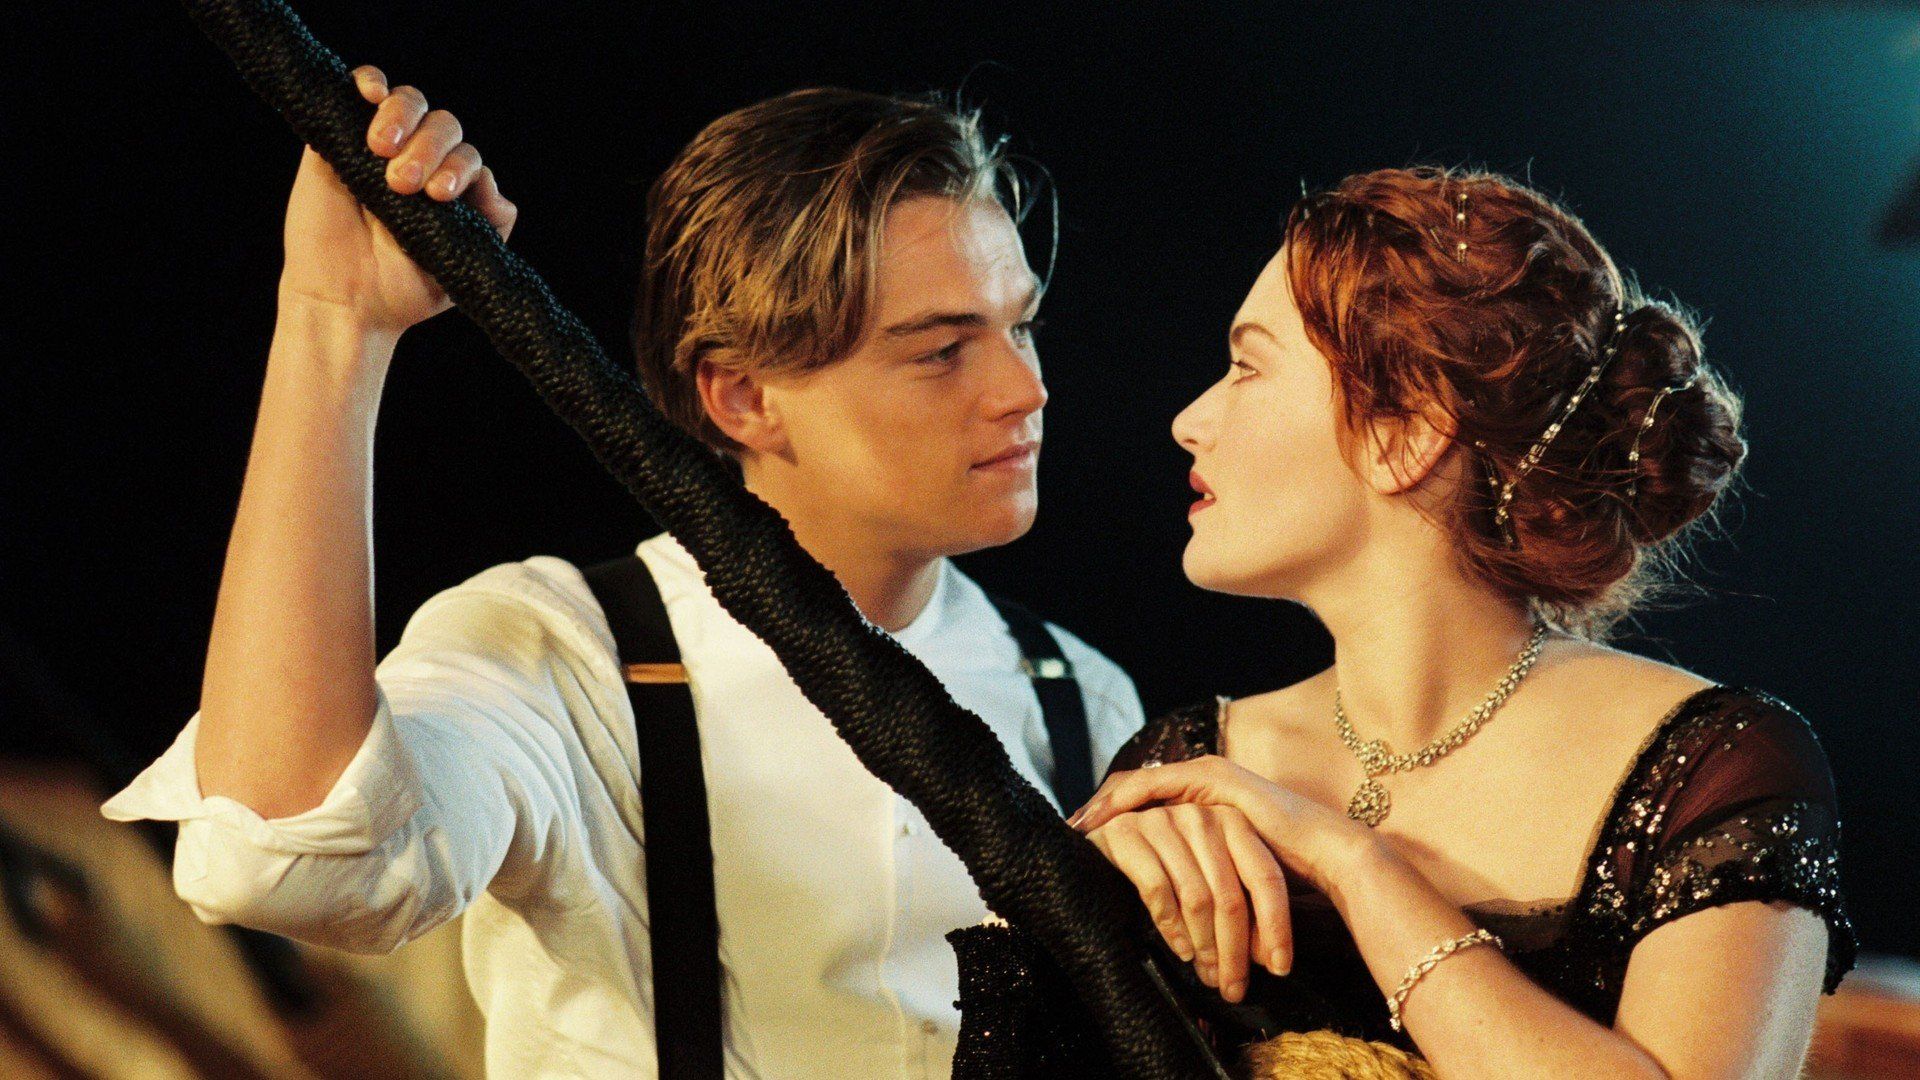 Kate Winslet movies Titanic romantic Leonardo DiCaprio wallpaperx1080